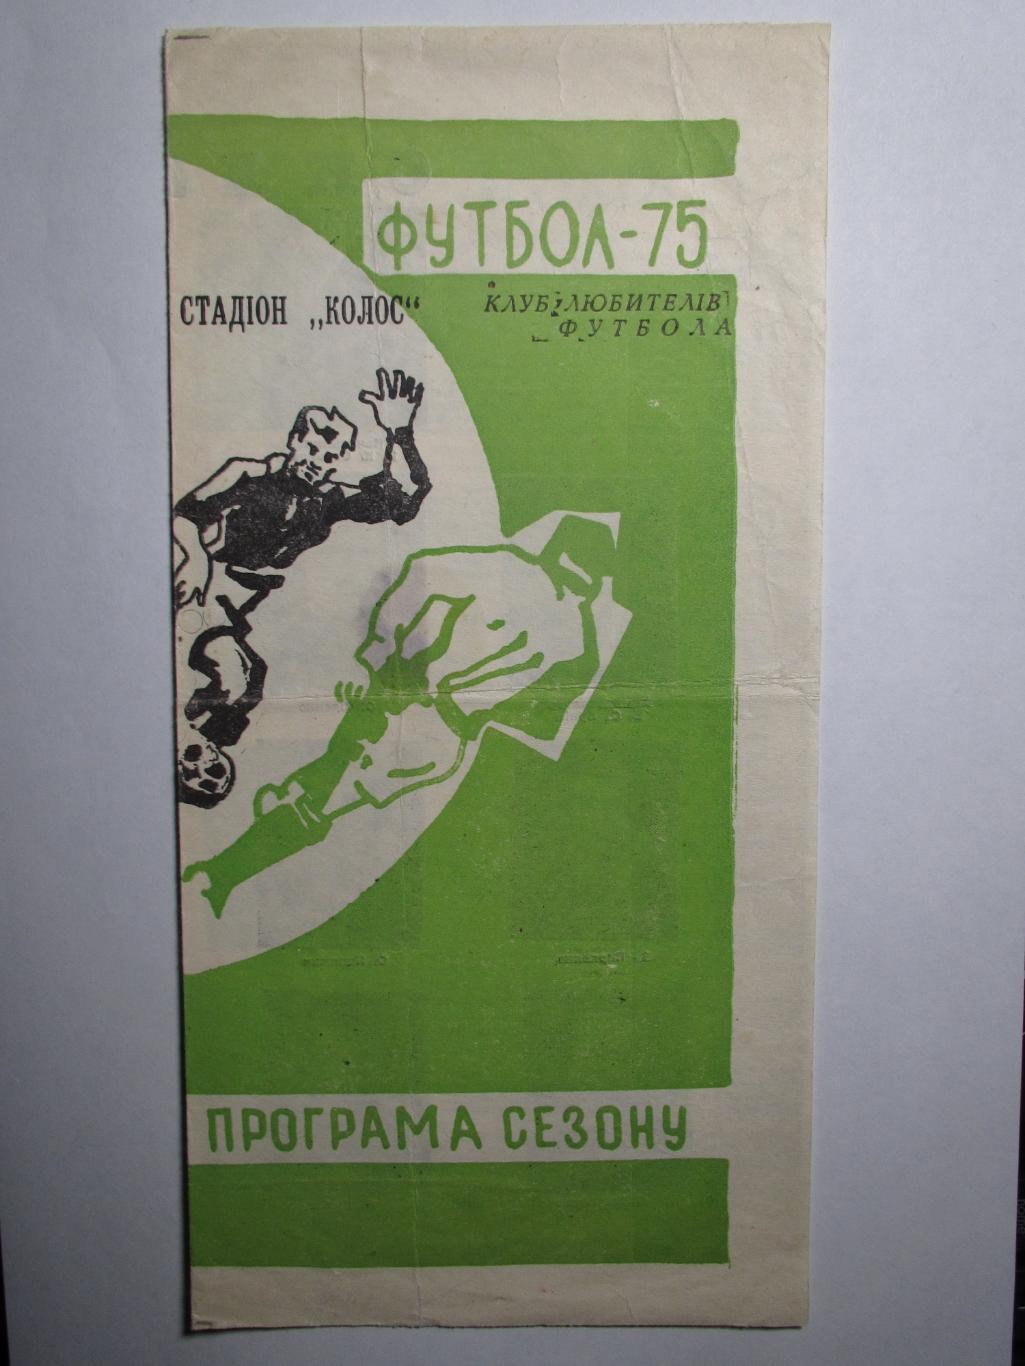 Колос Полтава 1975,программа сезона